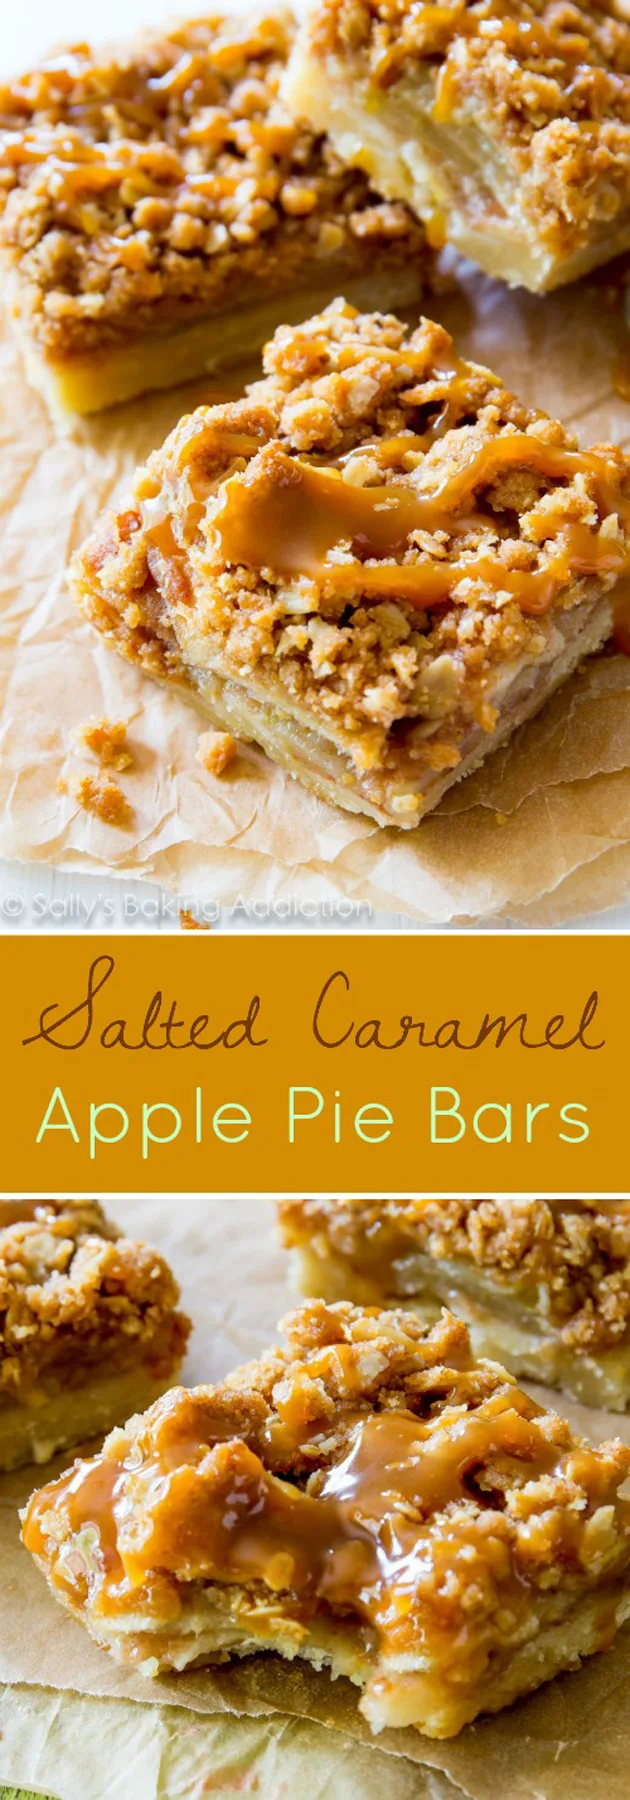 Salted-Caramel-Apple-Pie-Bars- sallys baking addiction